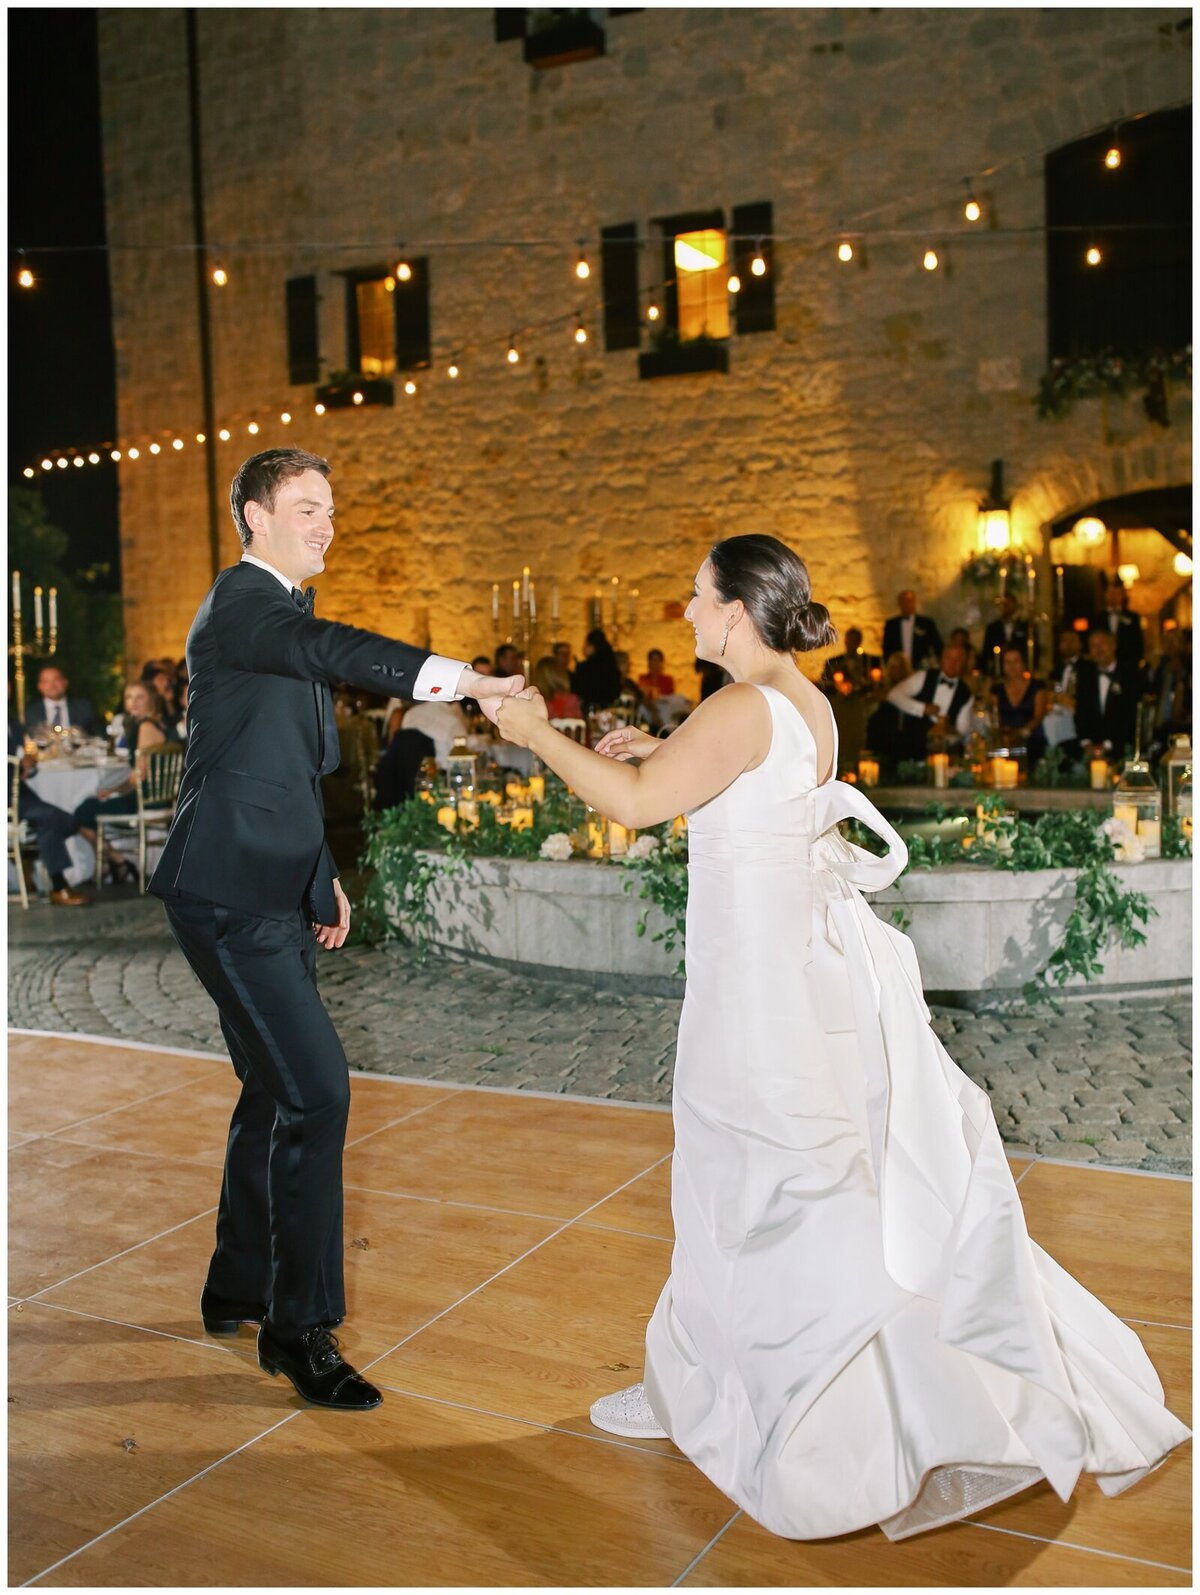 Kelsey-Alex-Sonoma-Buena-Vista-Winery-Wedding-Cassie-Valente-Photography-0934